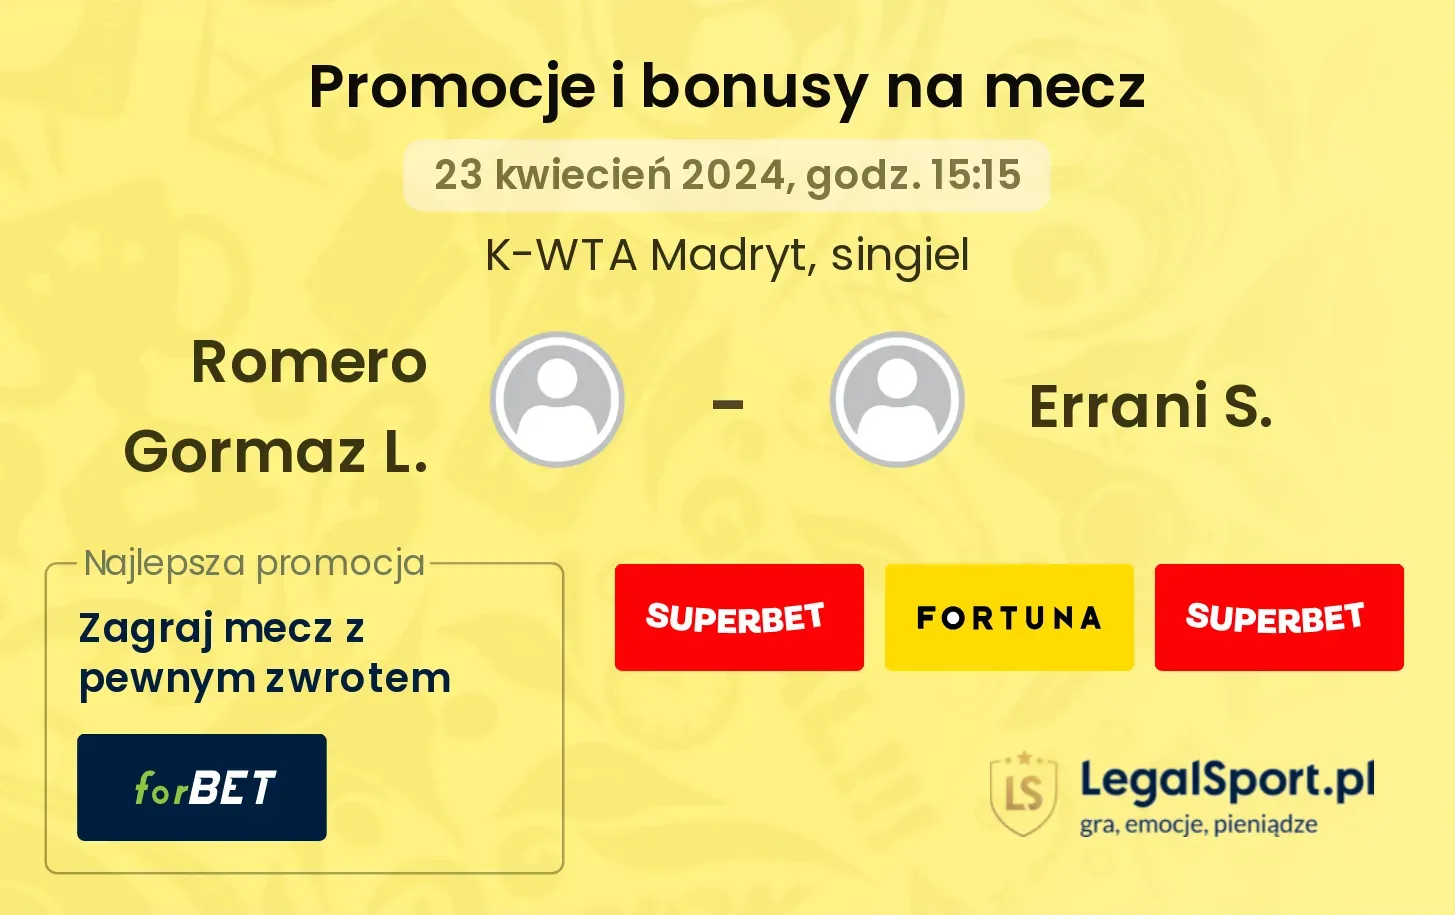 Romero Gormaz L. - Errani S. promocje bonusy na mecz